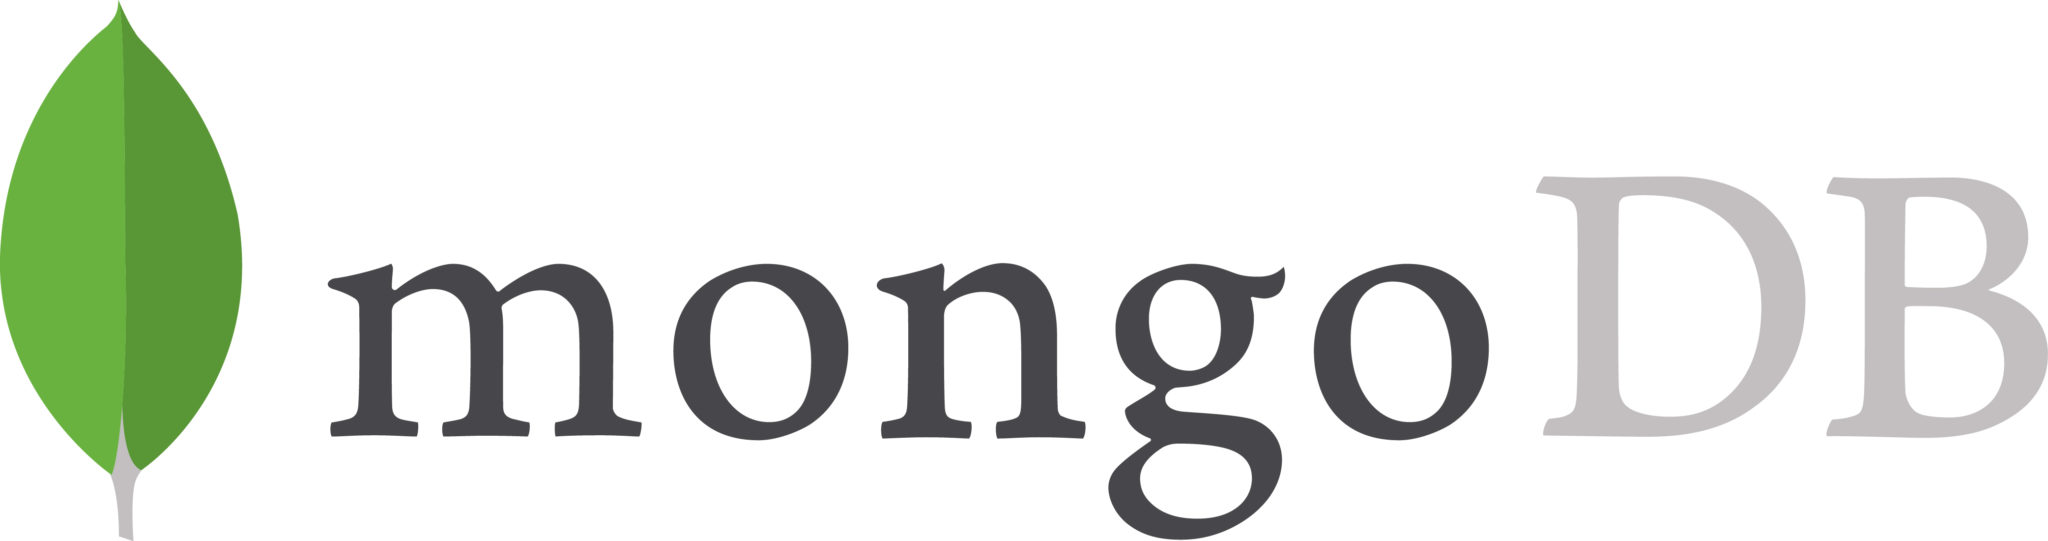 MongoDB Logo - SQL vs NoSQL - Edureka